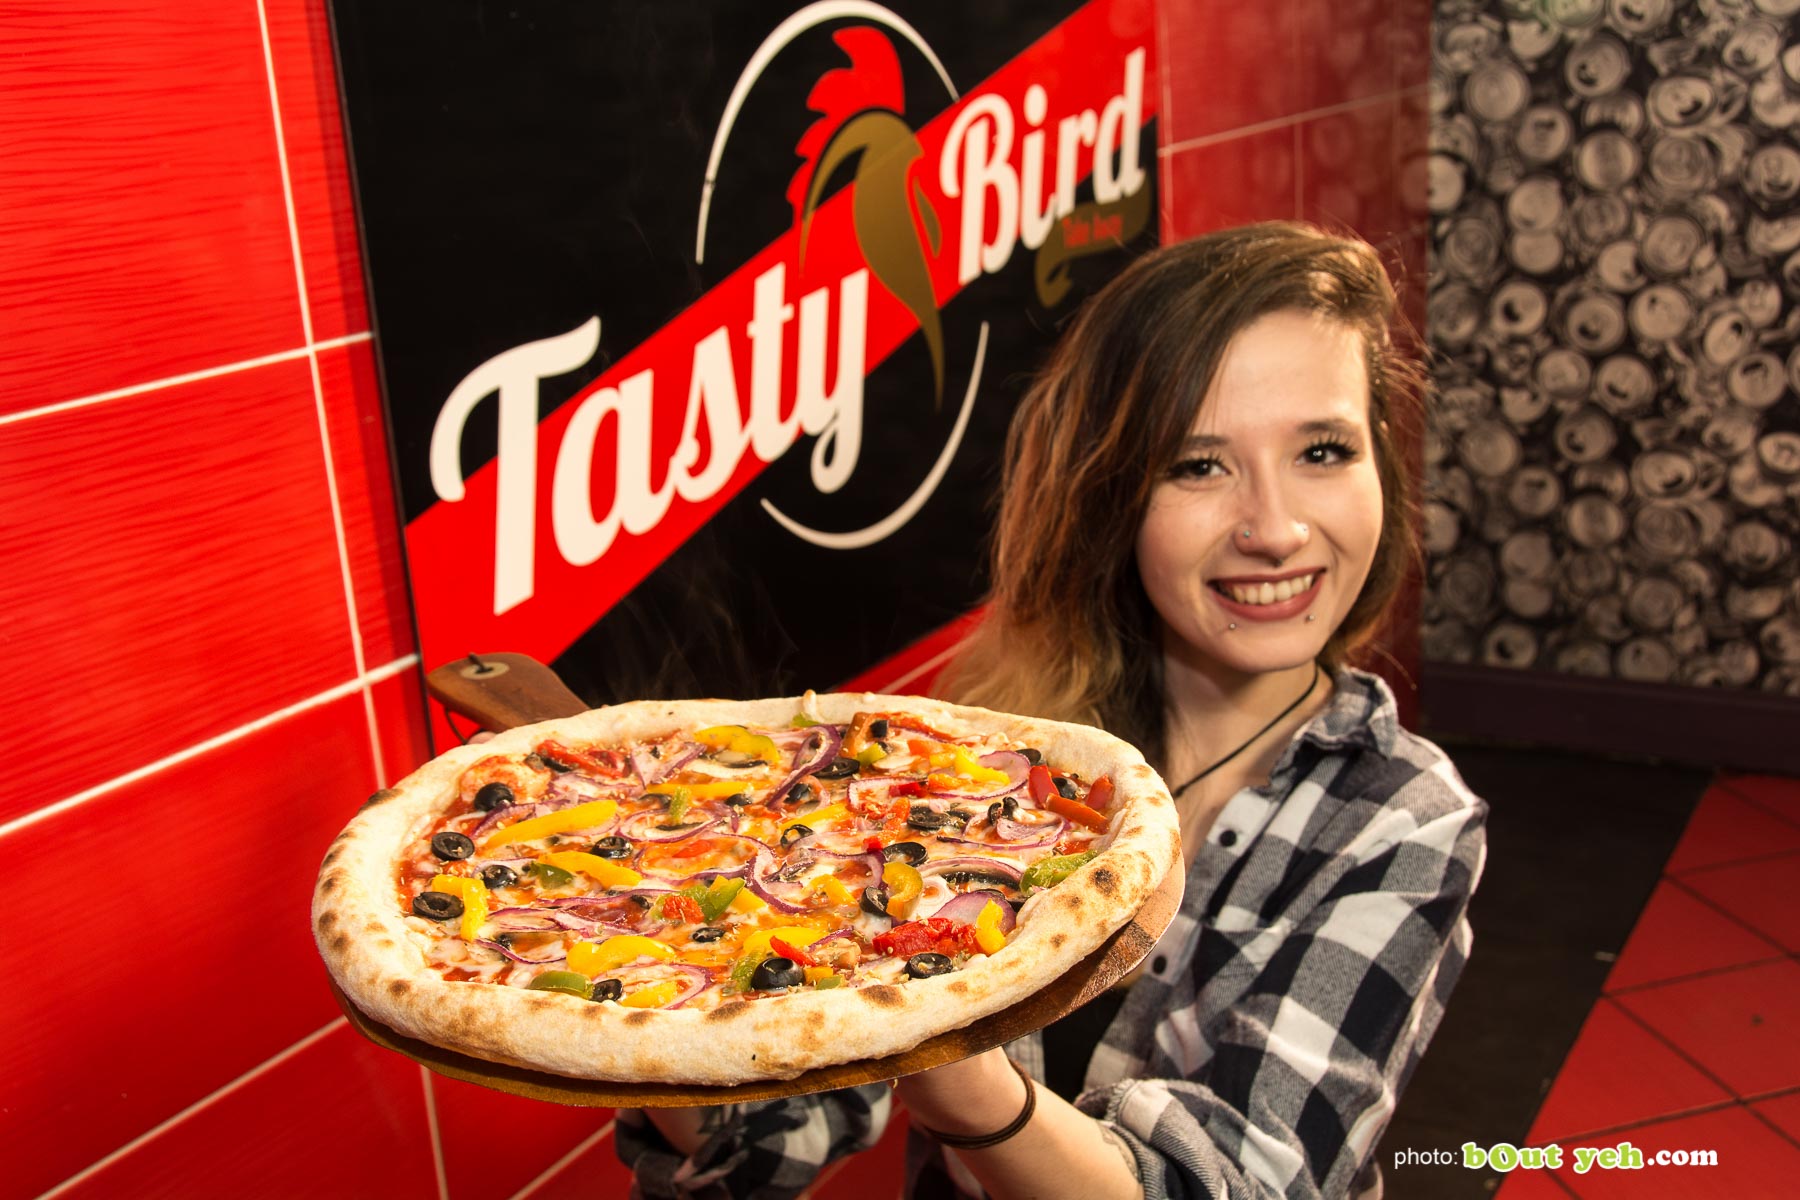 Food photographers Belfast portfolio photo 6084 - vegan pizza at Tasty Bird Restaurant Belfast